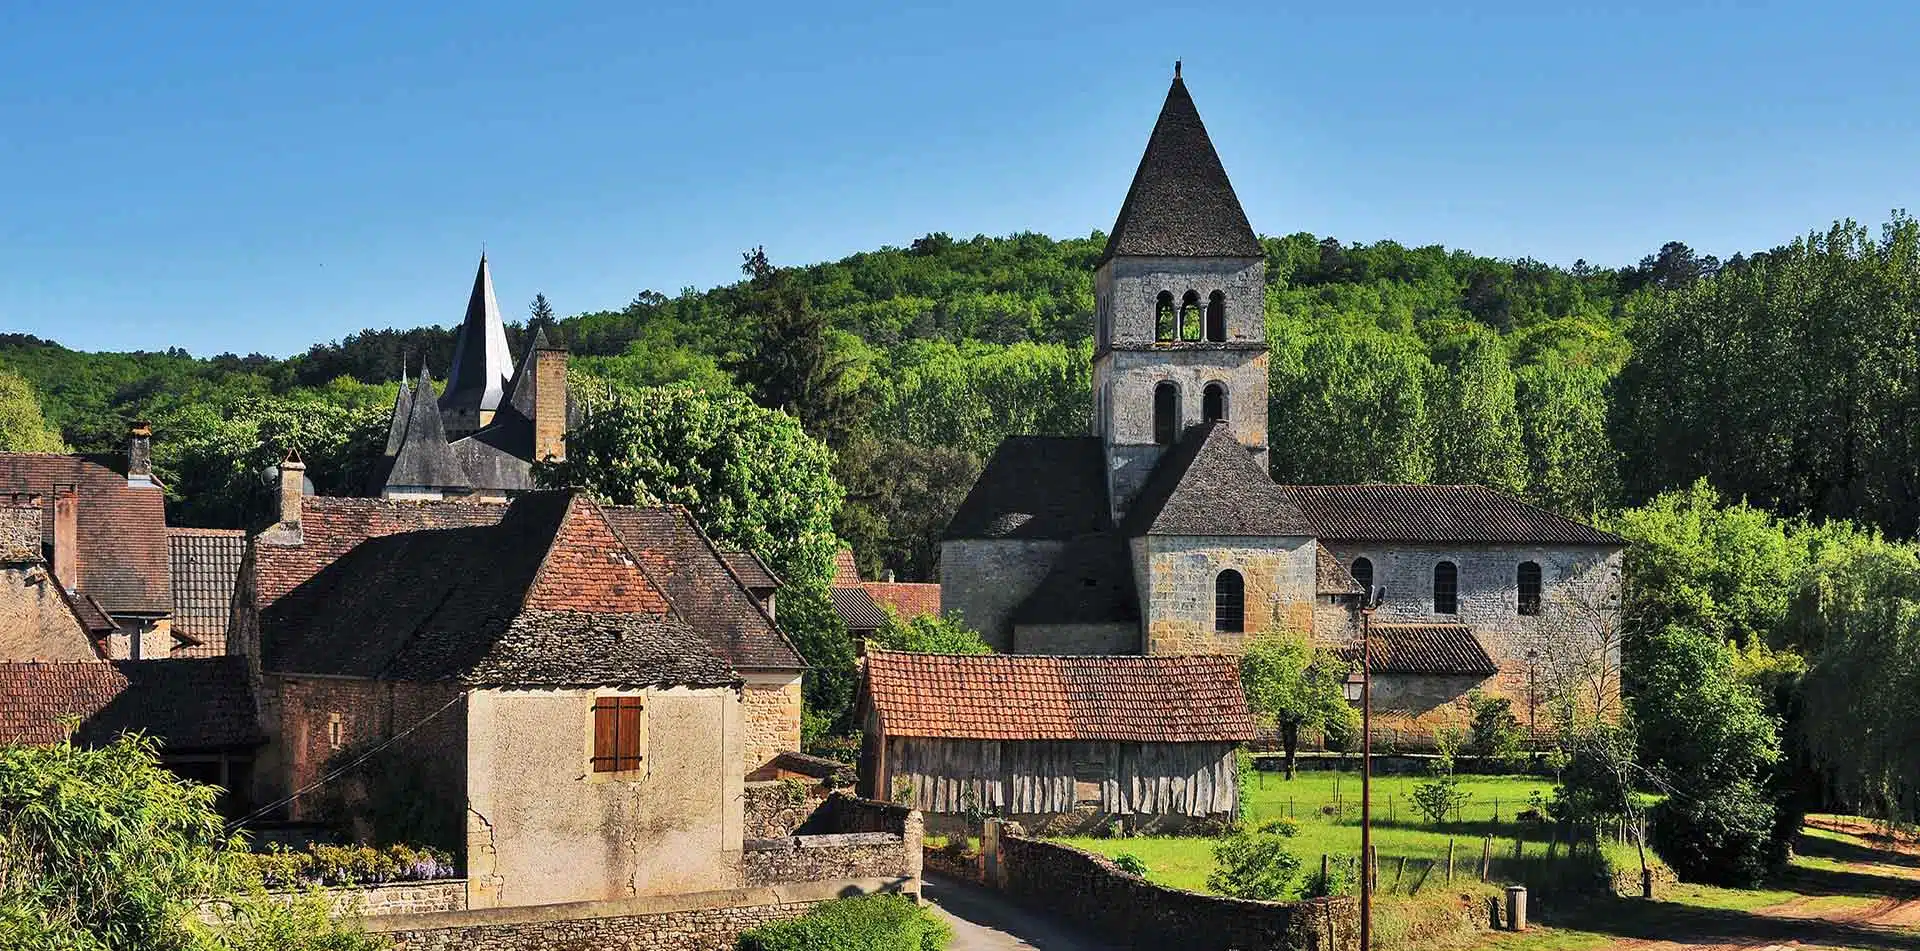 Village in Bordeaux, France